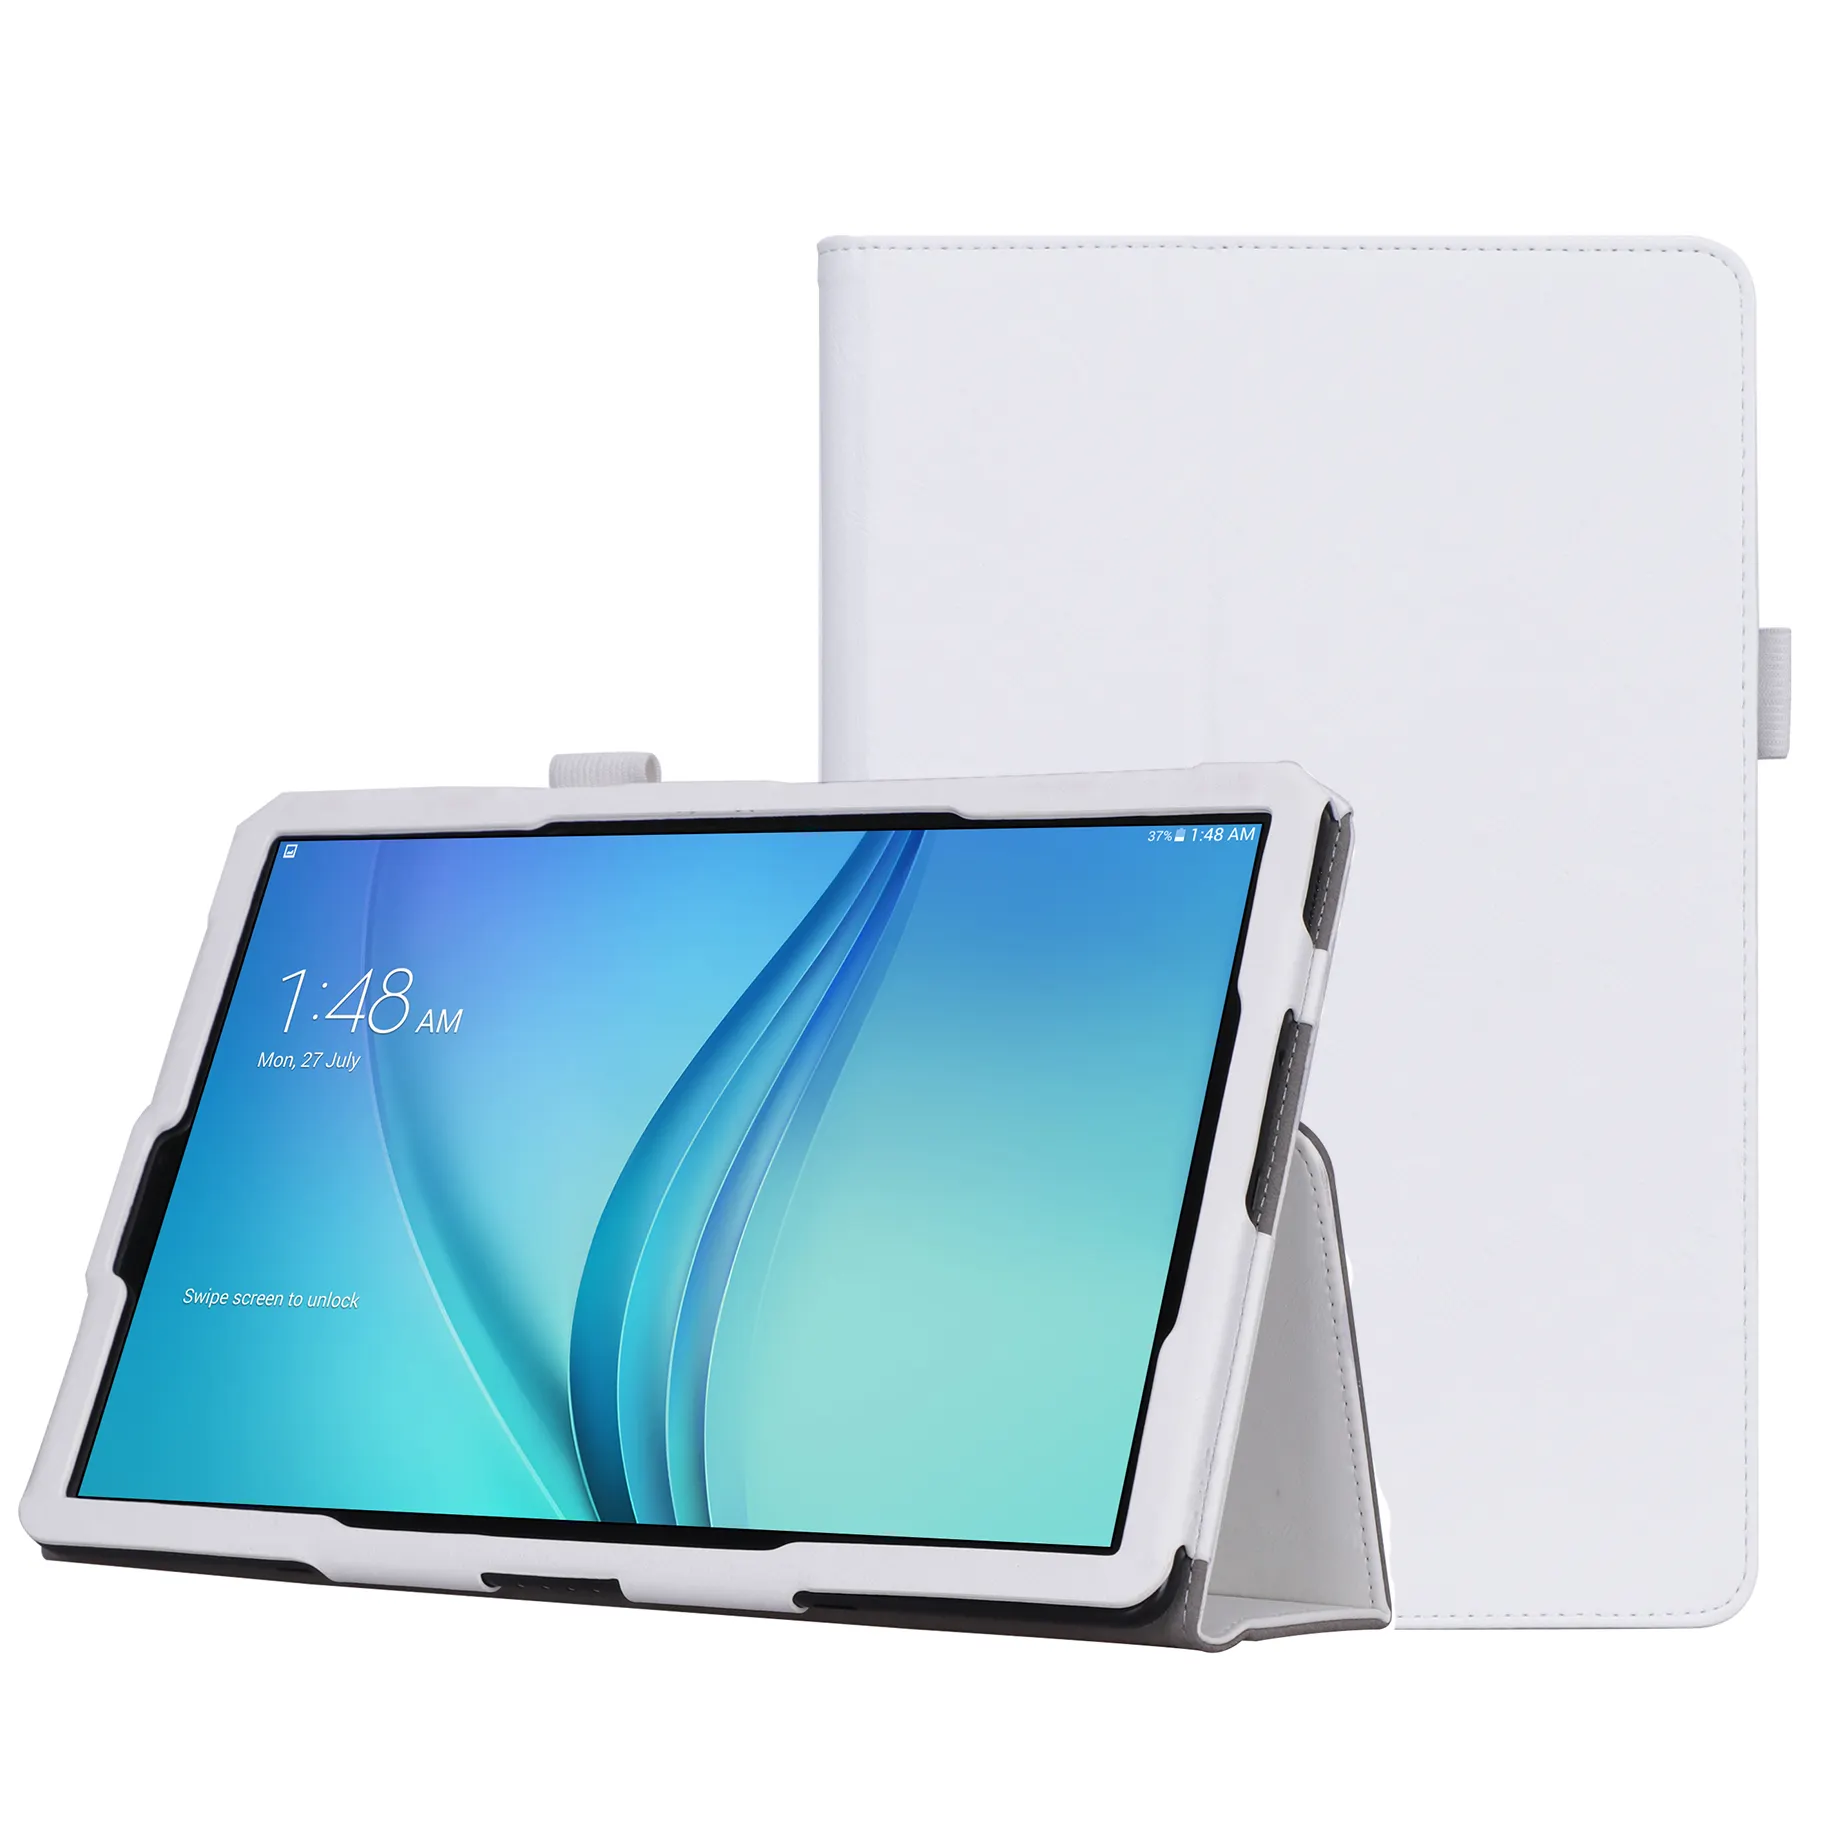 Dickes weißes PU-Leder 7 Zoll gebrauchte Tablet-Hülle für Samsung Galaxy Tab 3